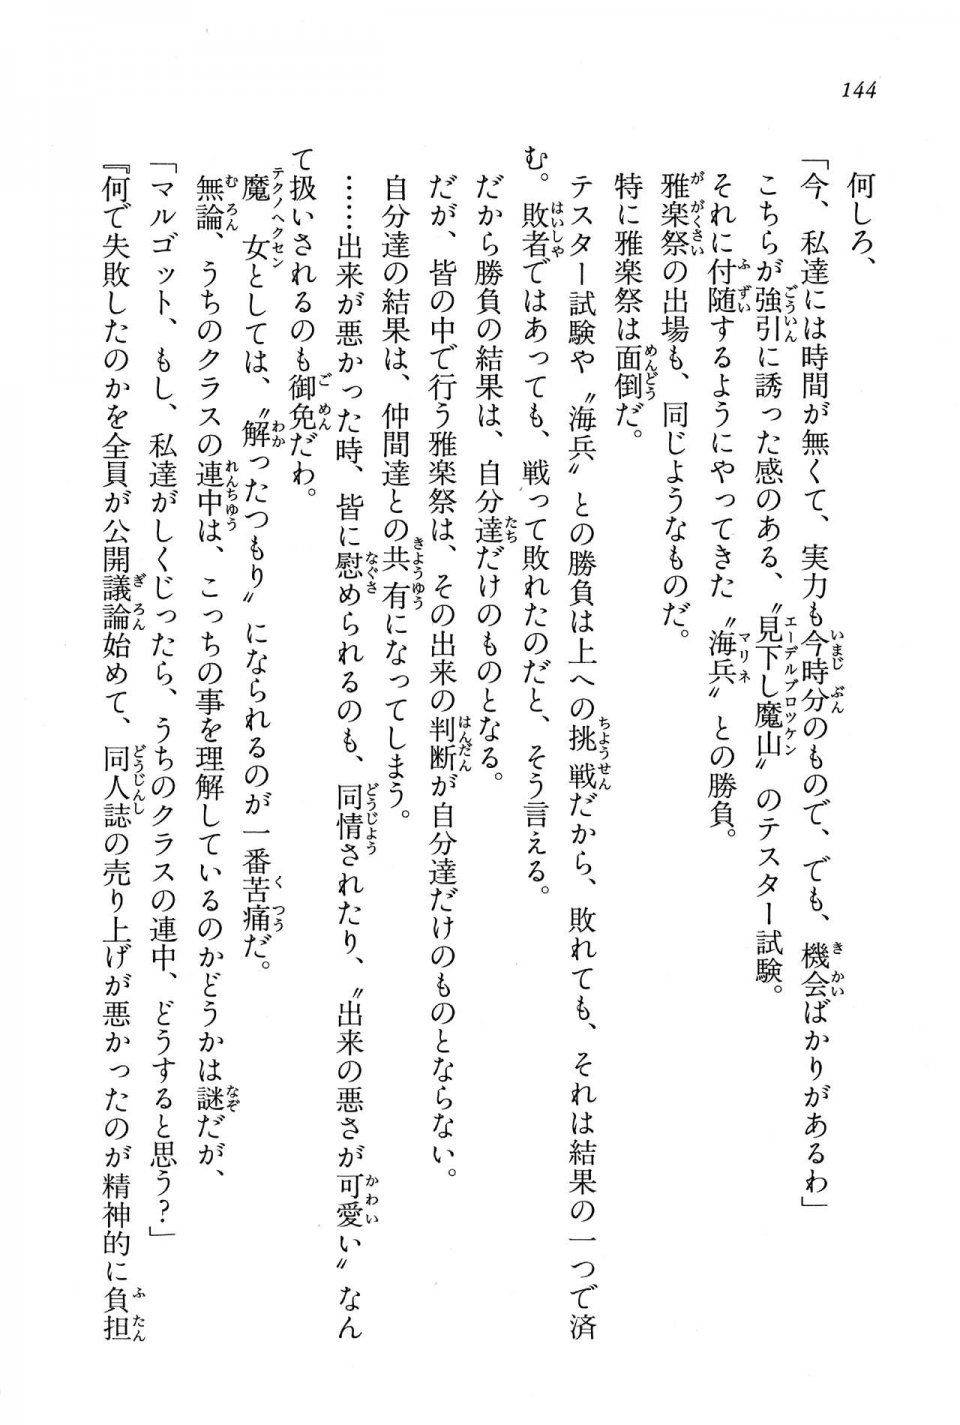 Kyoukai Senjou no Horizon BD Special Mininovel Vol 6(3B) - Photo #148